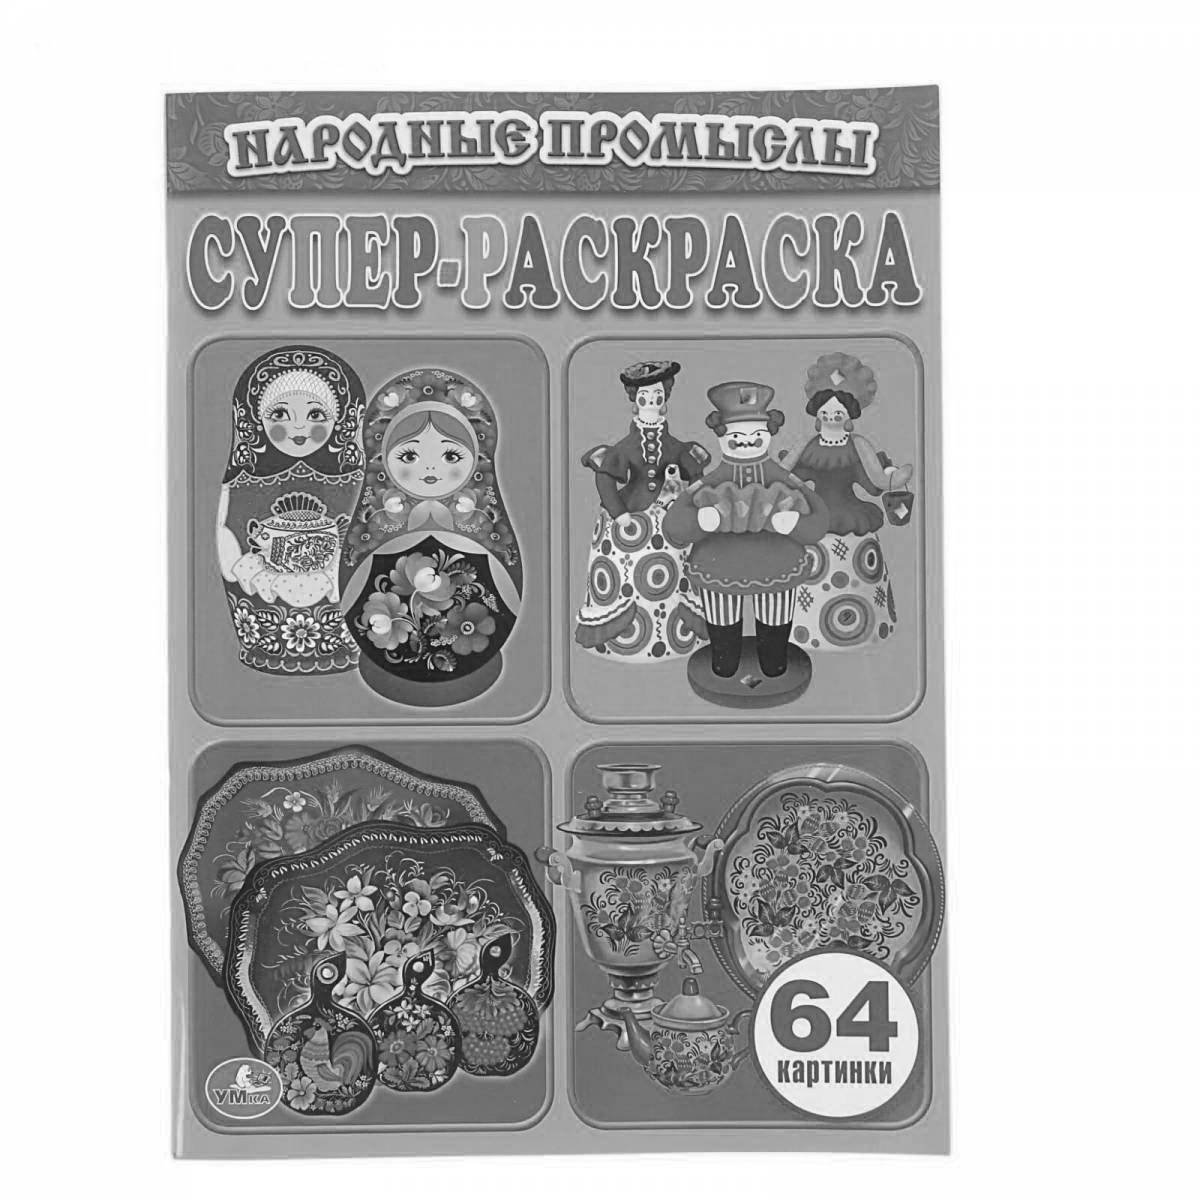 Smart Russian folk crafts for schoolchildren